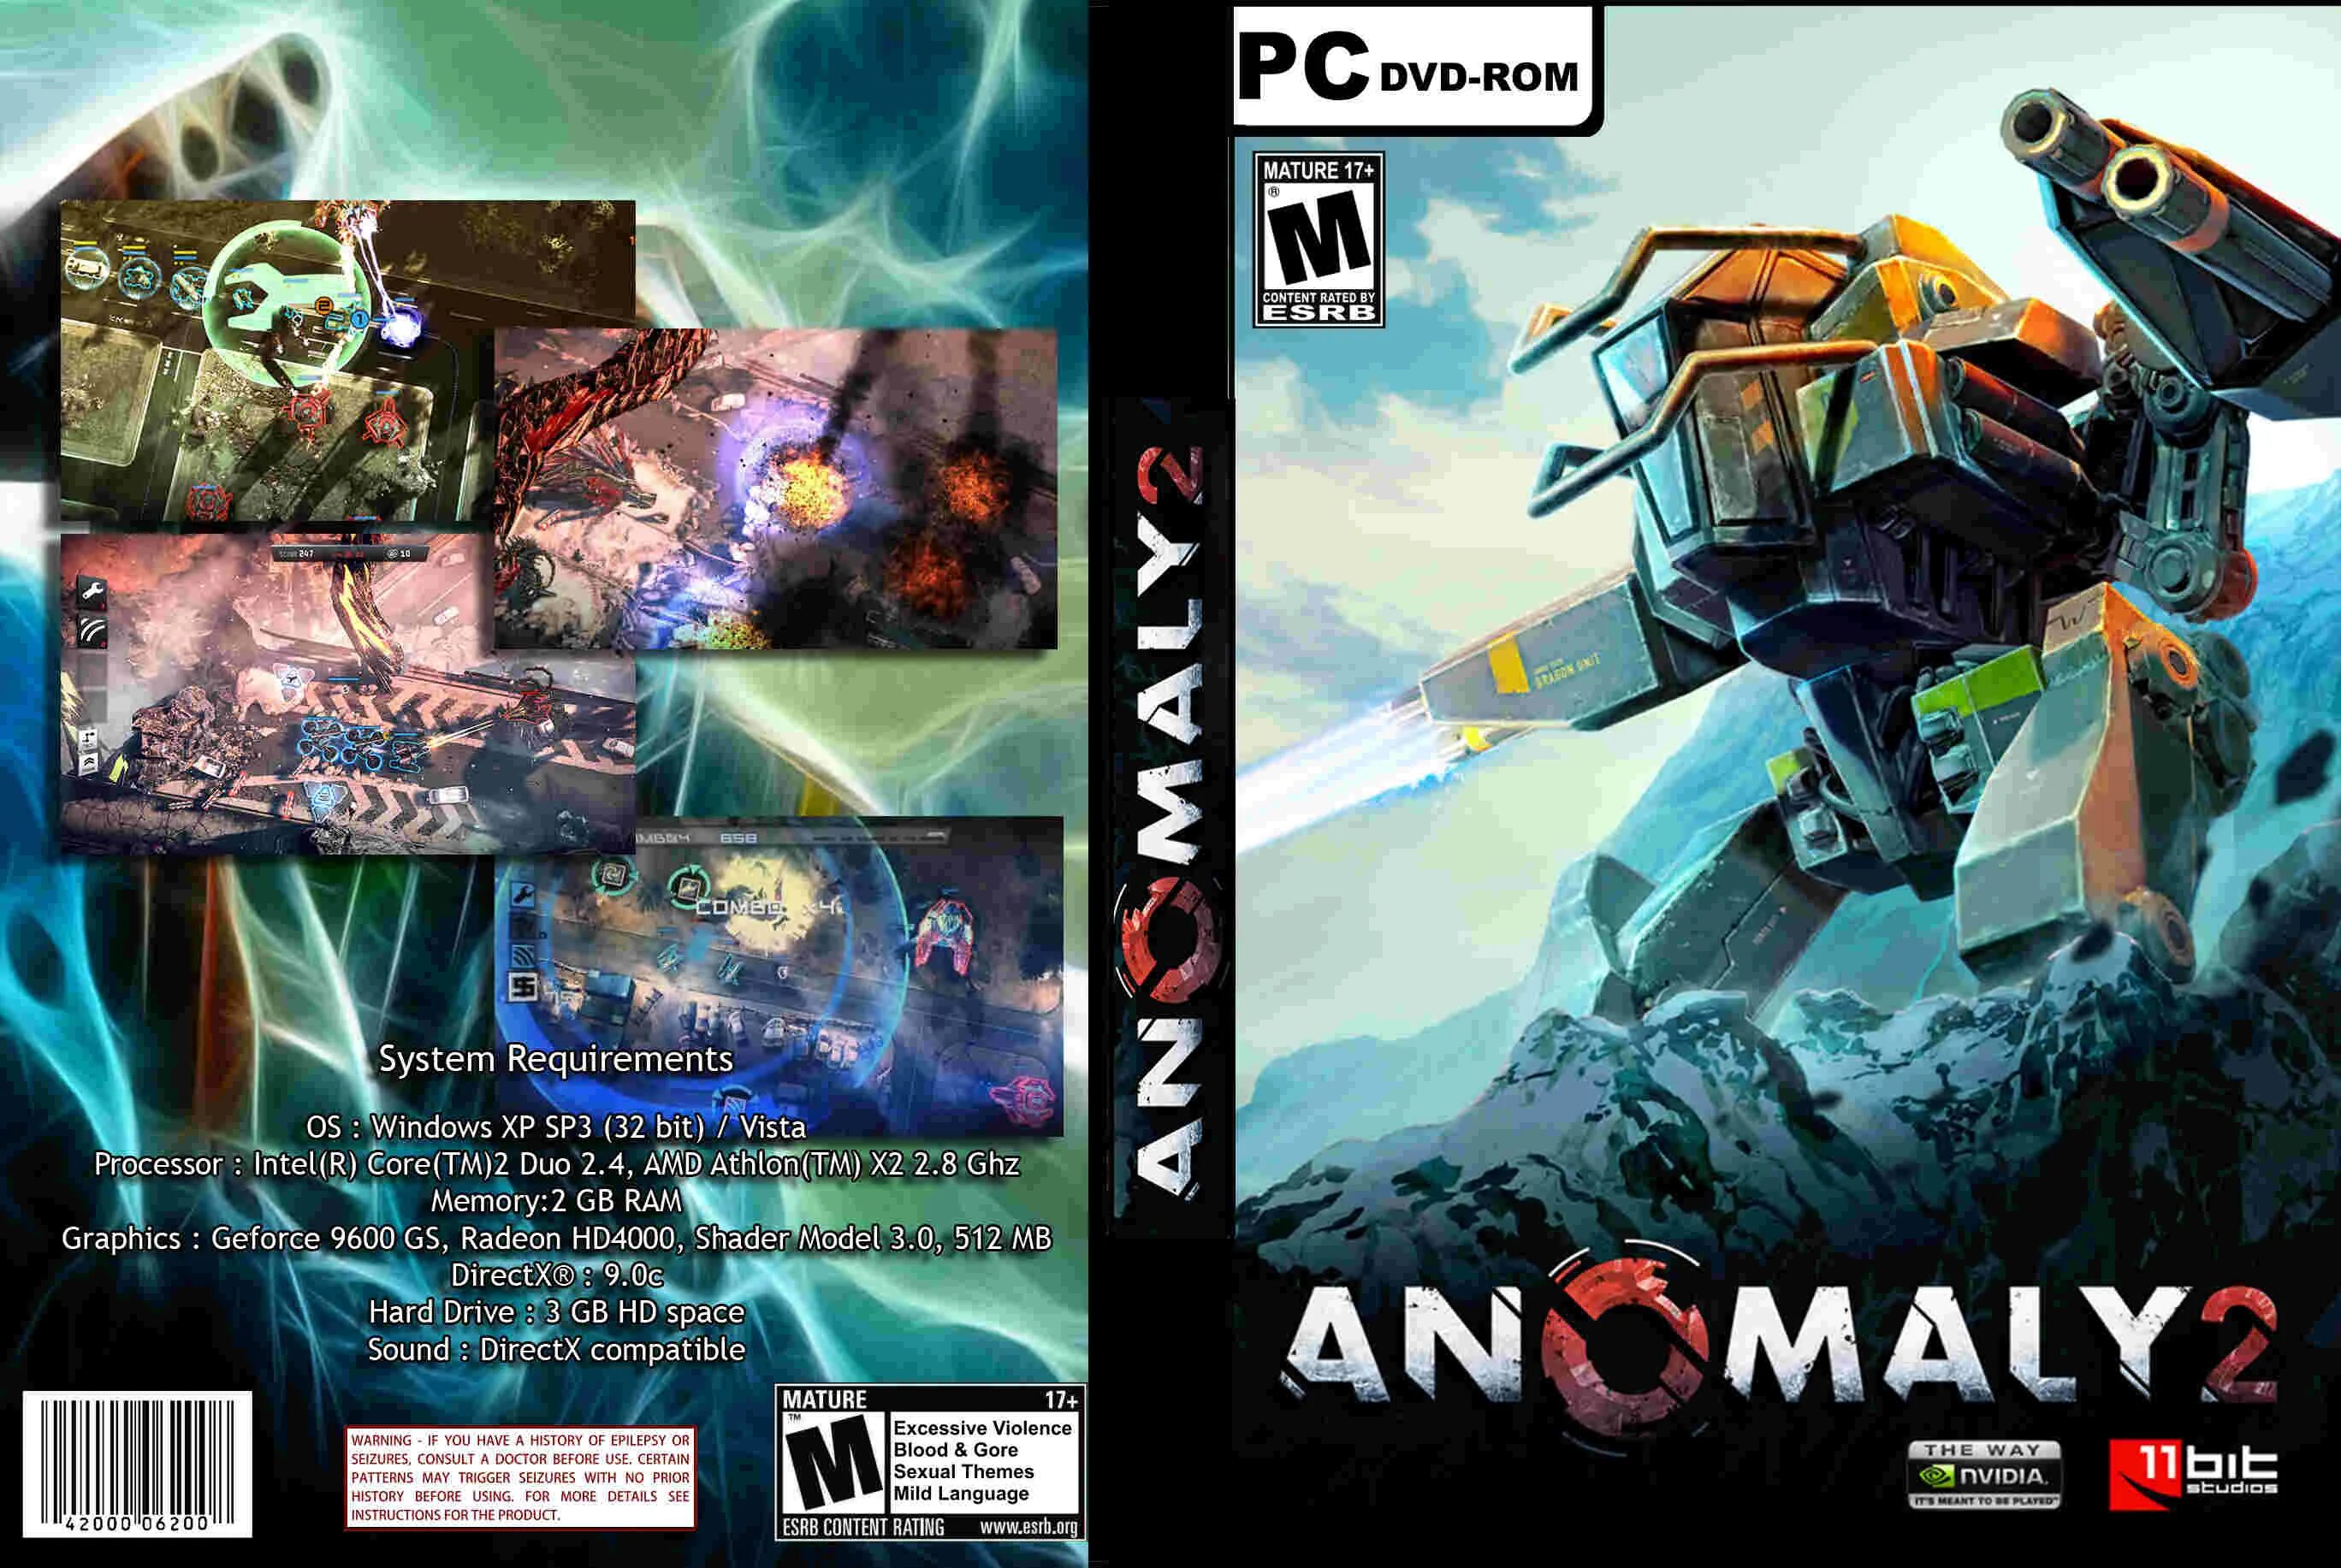 Аномалия 2 книга. Anomaly Zone обложка игры. Игры под DVD. Anomaly 1.5.2 обложка. Используемые журналы Anomaly.